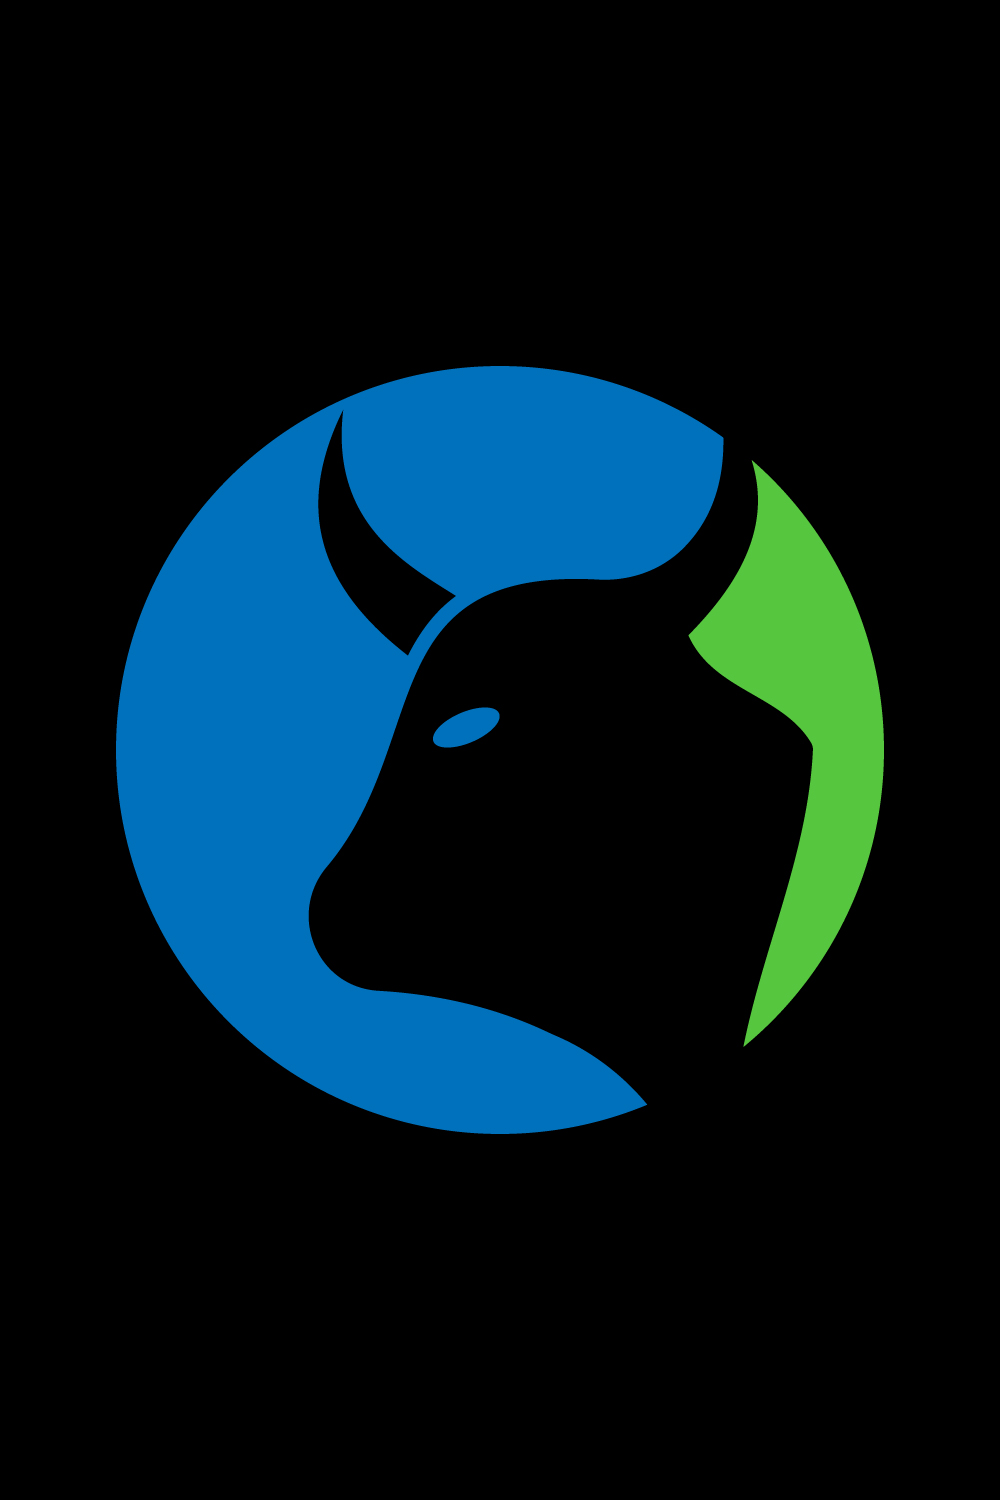 Creative Cow head logo design, Vector design template pinterest preview image.